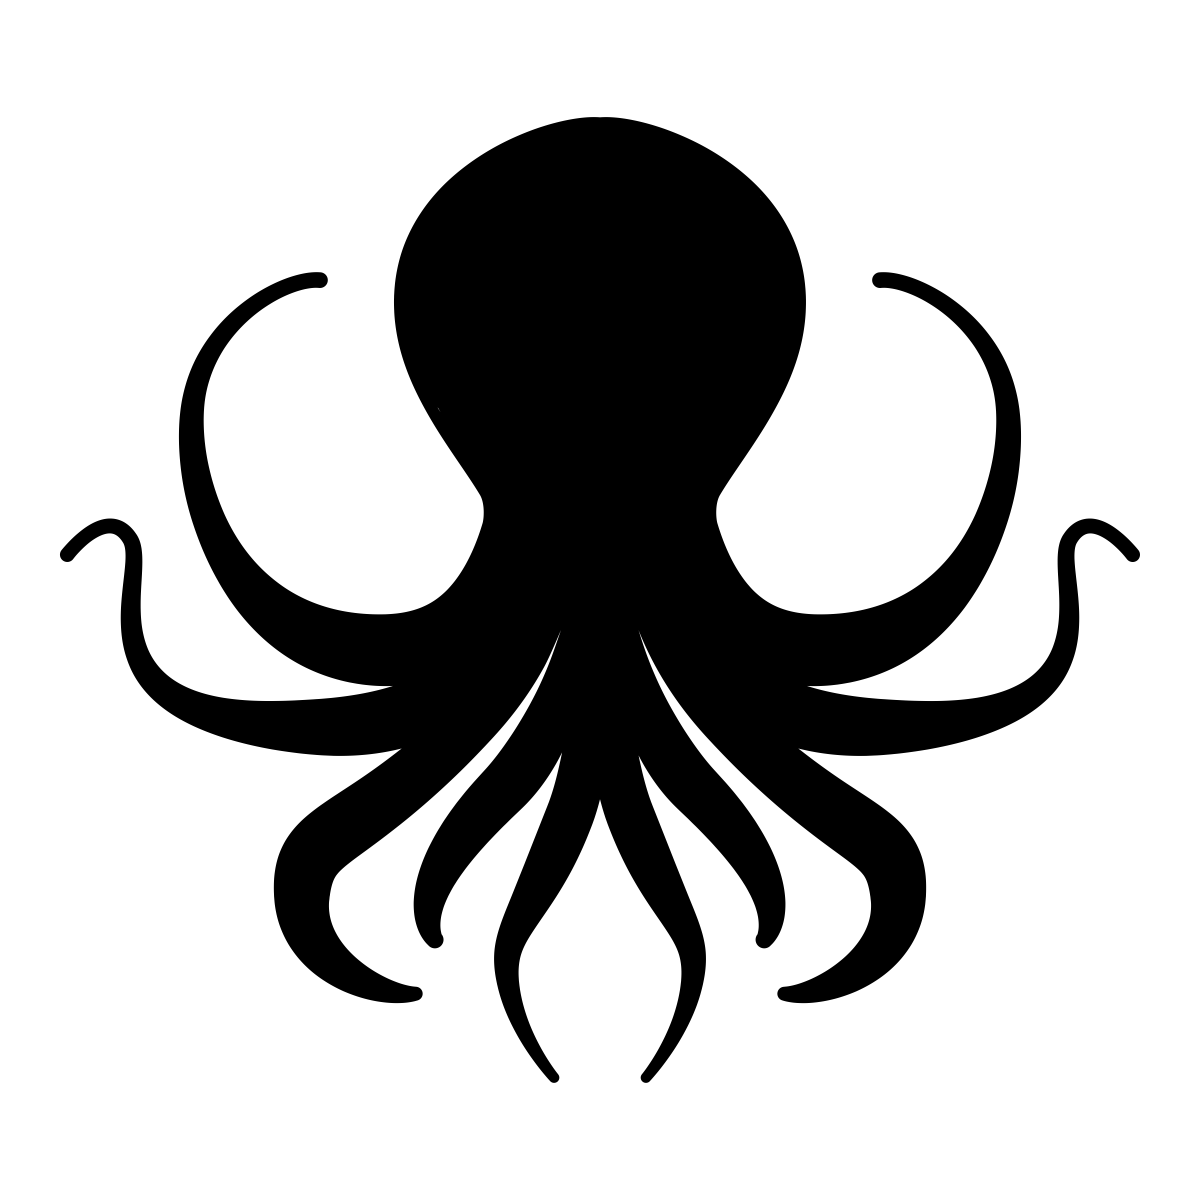 Логотип кракен маркетплейс. Кракен значок. Осьминог силуэт. Осьминог логотип. Осьминог логотип на прозрачном фоне.